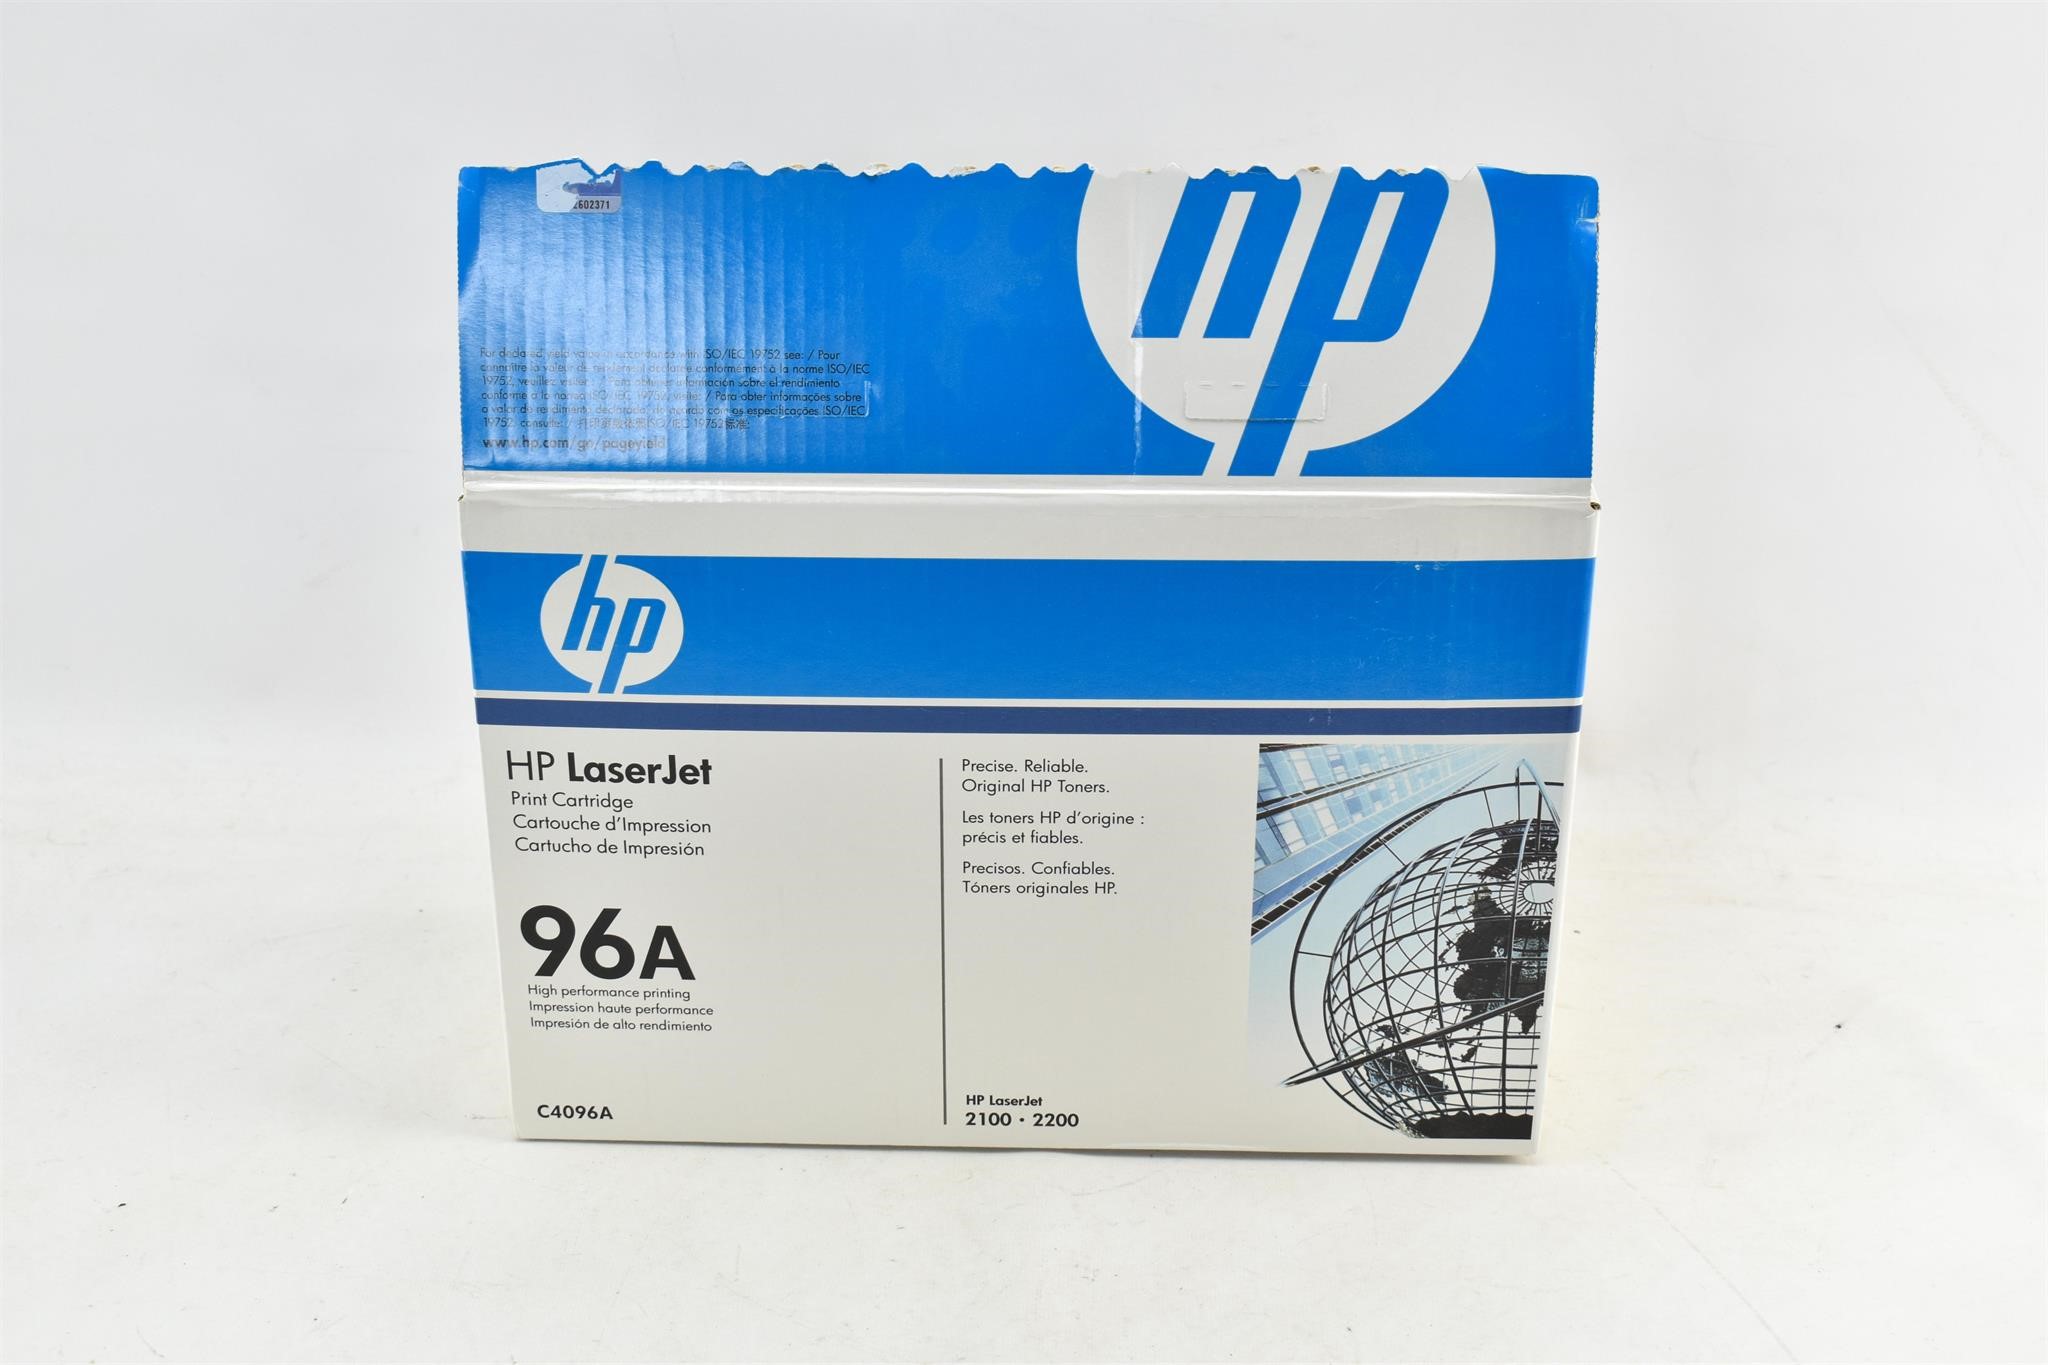 HP LaserJet 96A C4096A Printer Toner Cartridge